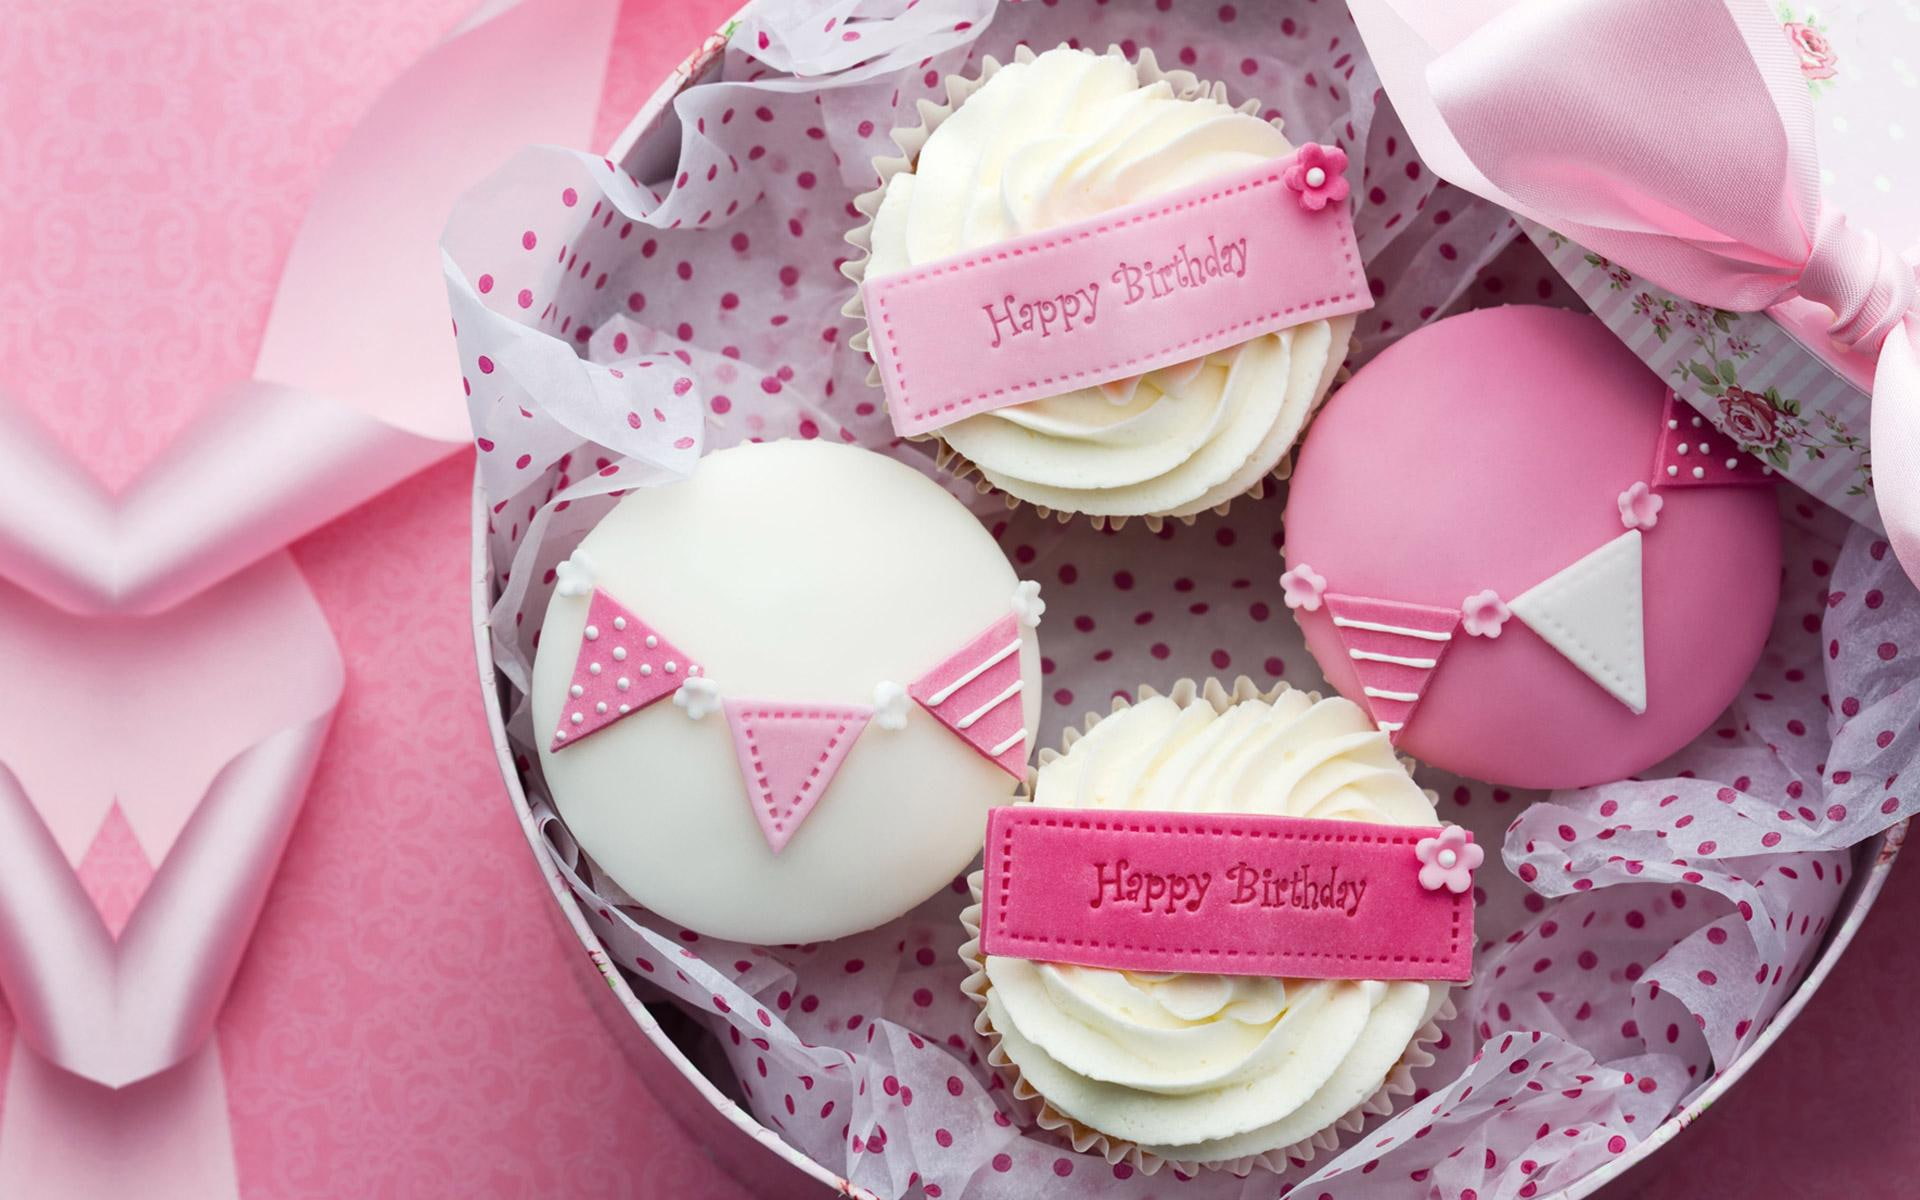 Happy Birthday JACQELINEla!!!, four pink and white cupcakes, ribbon